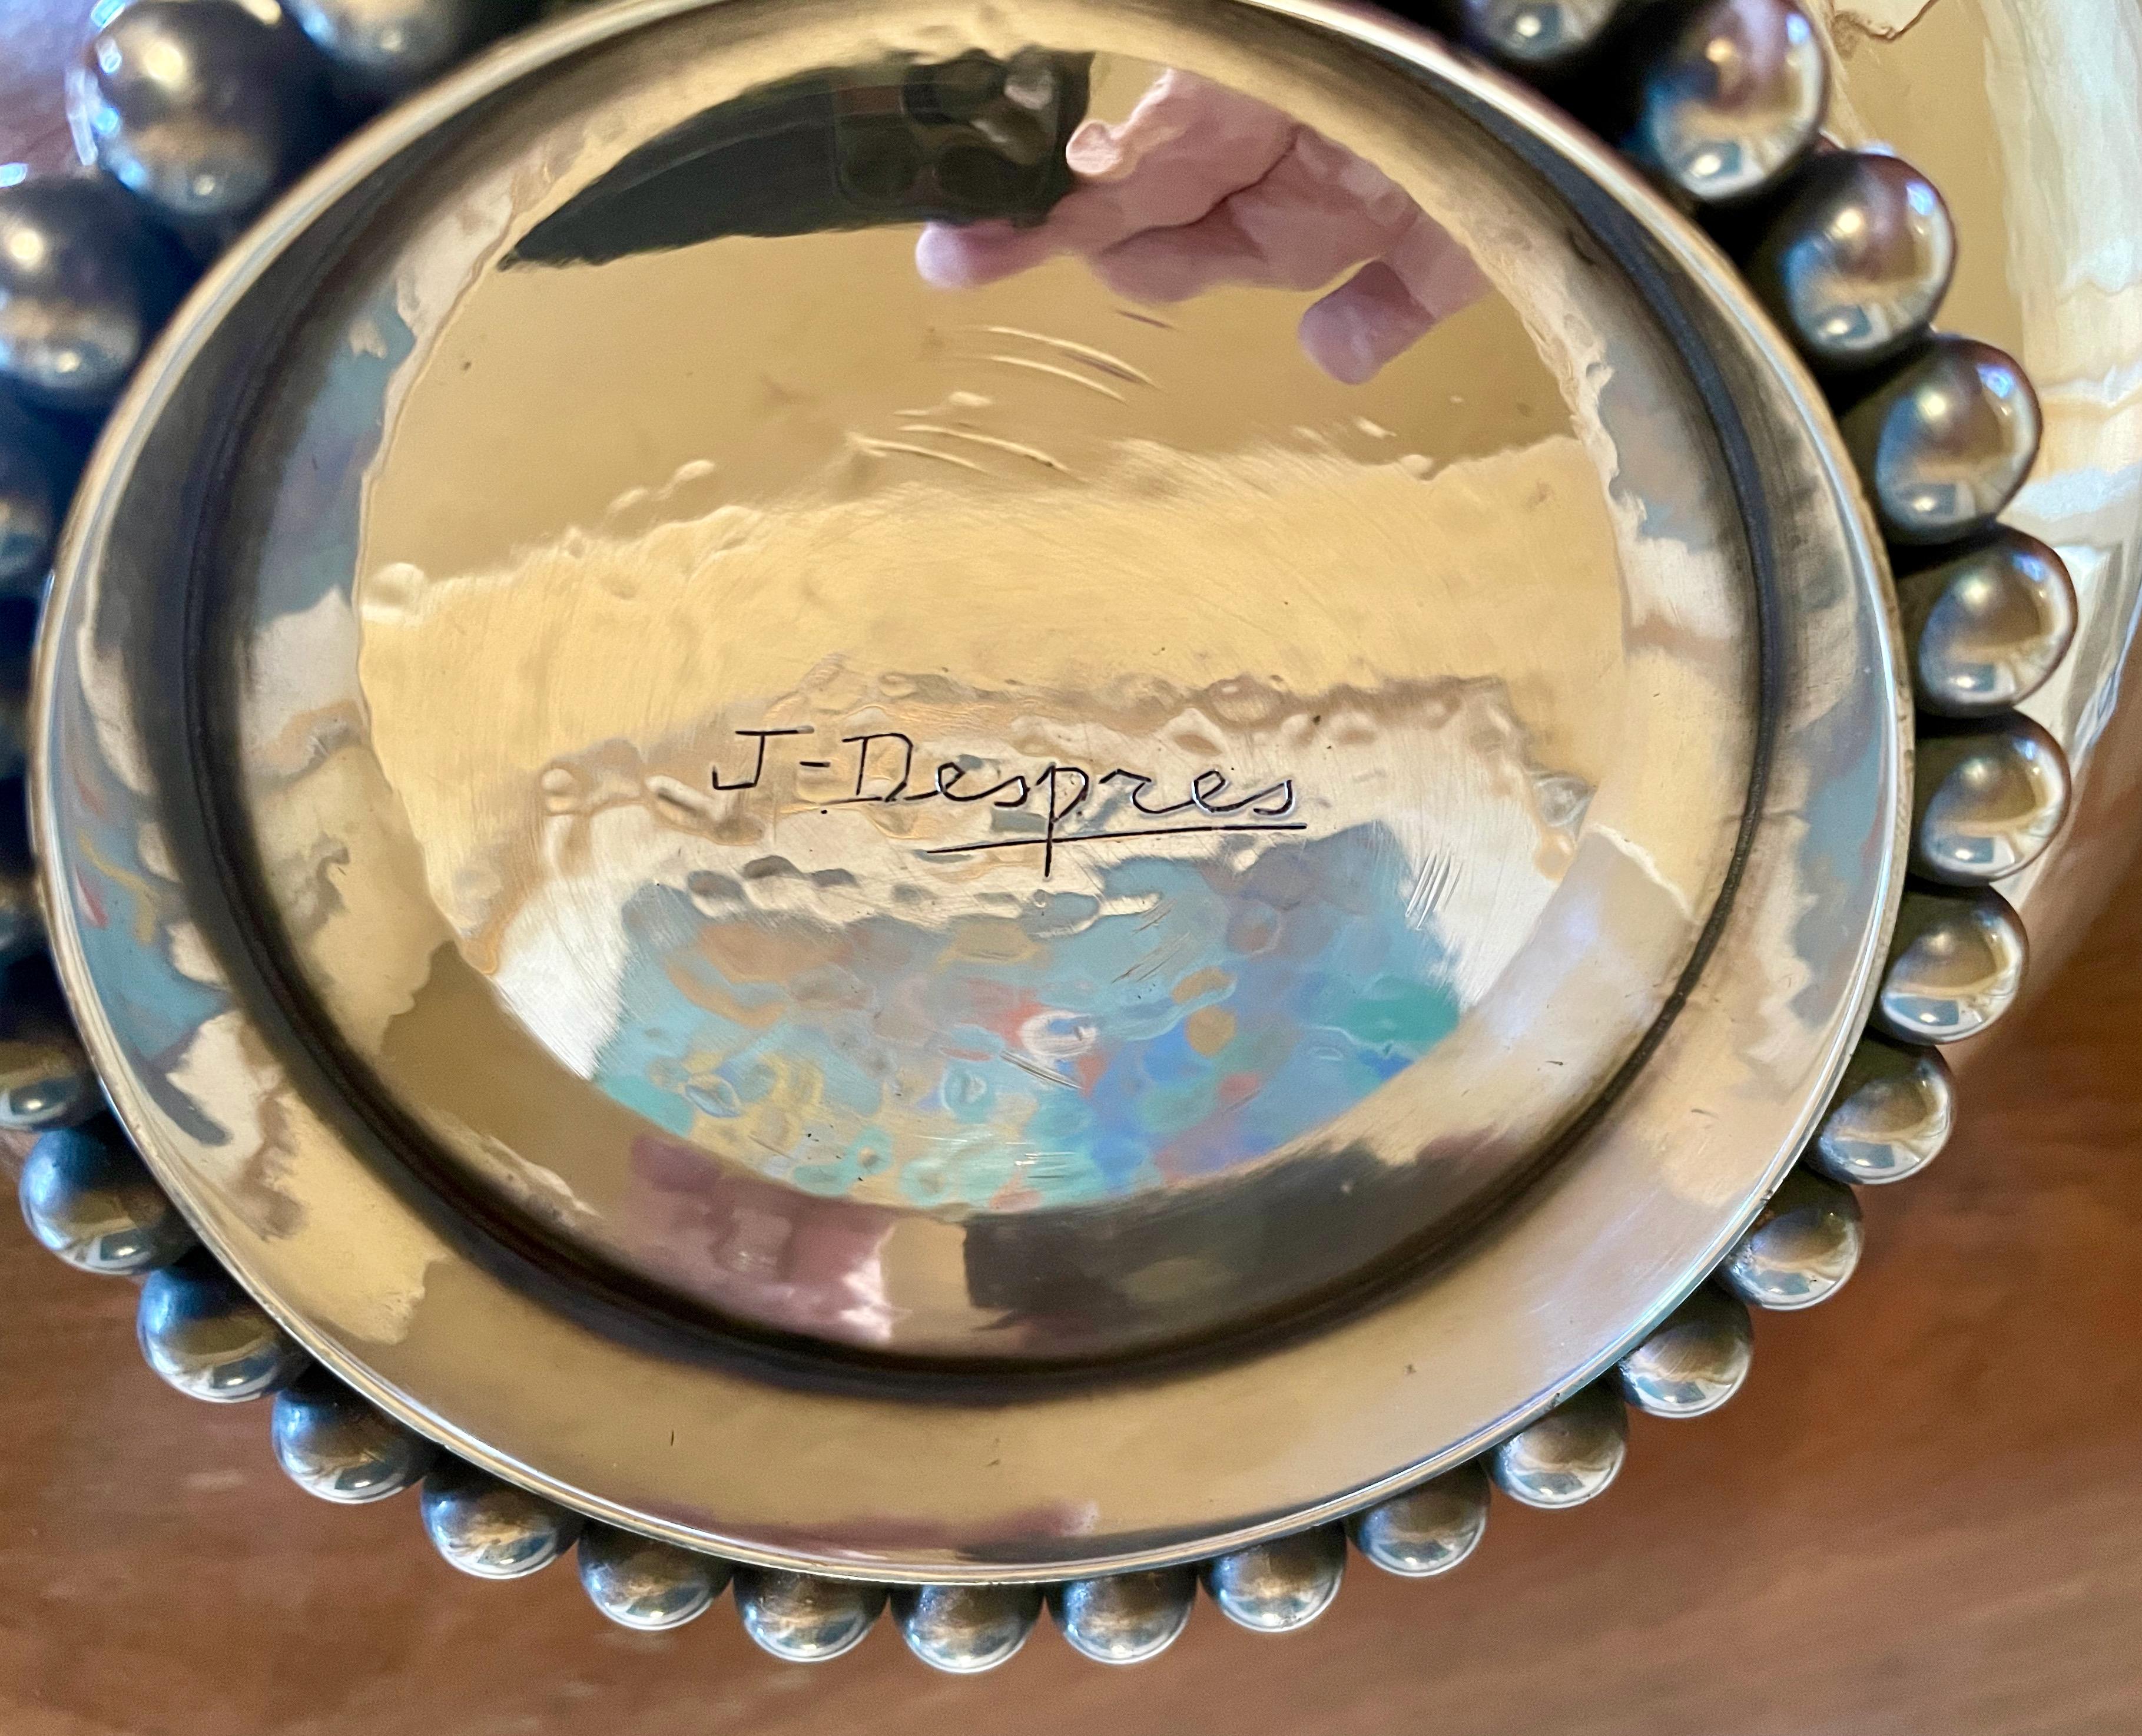 Jean Despres French Silver Plate Metal Bowl Unique Design In Good Condition For Sale In Oakland, CA